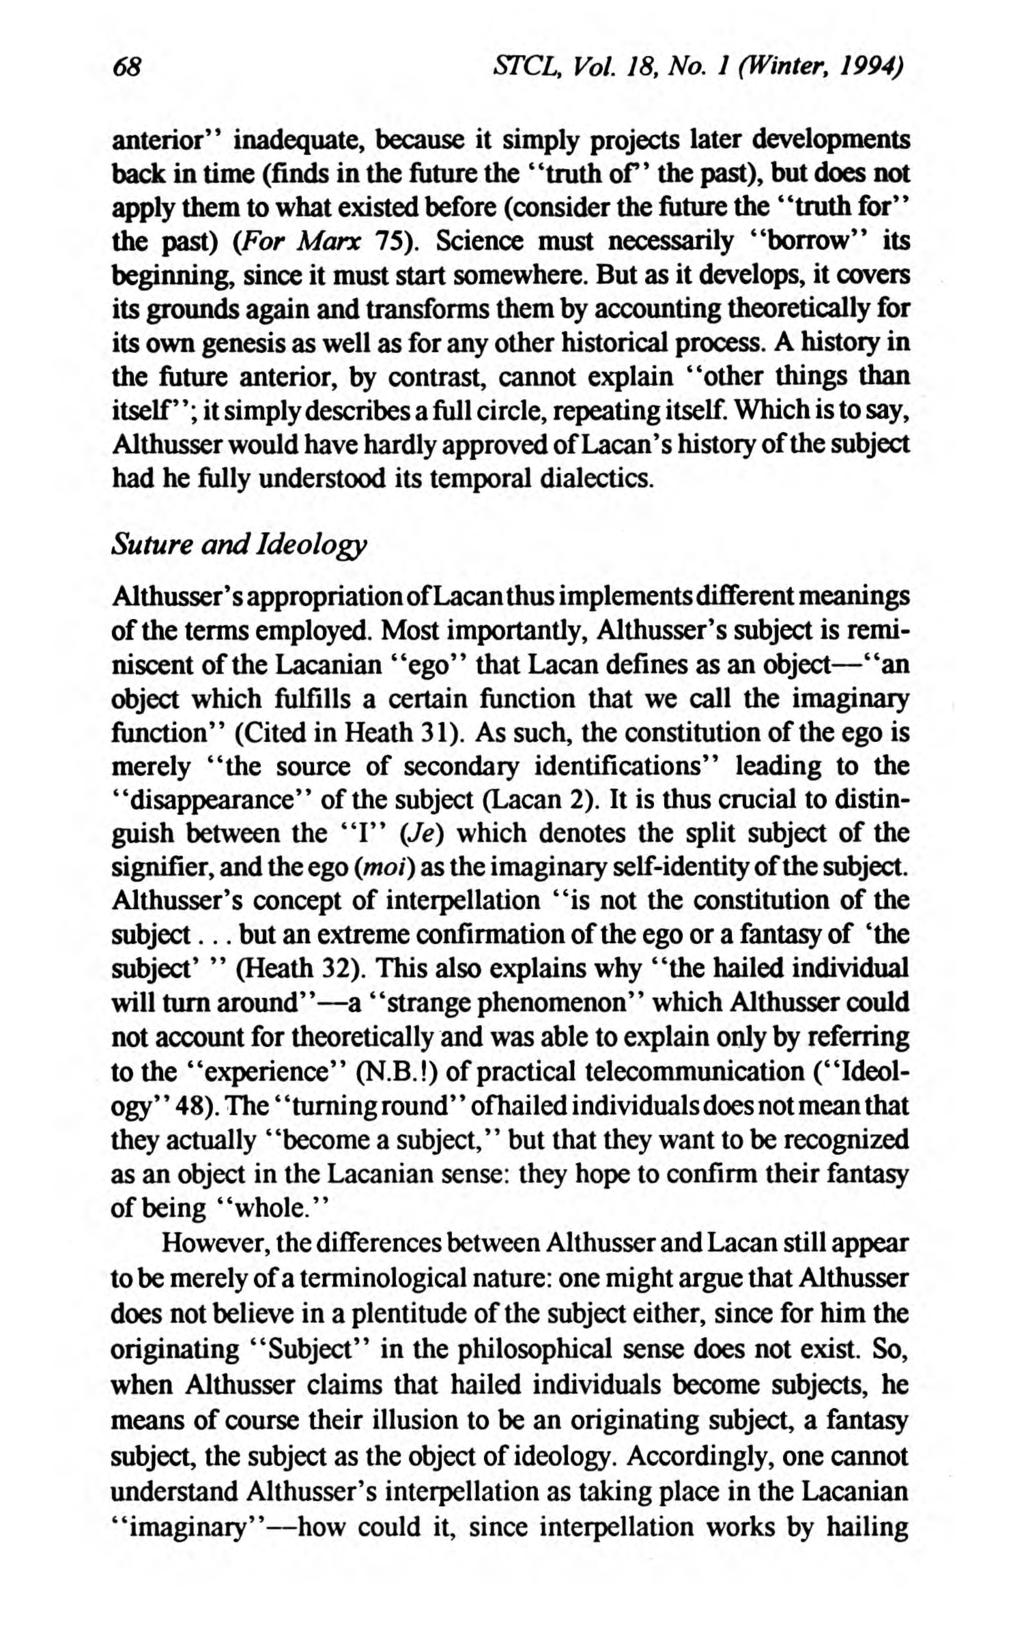 68 Studies in 20th & 21st Century Literature, STCL, Vol. 18, Iss. No. 1 [1994], 1 (Winter, Art.